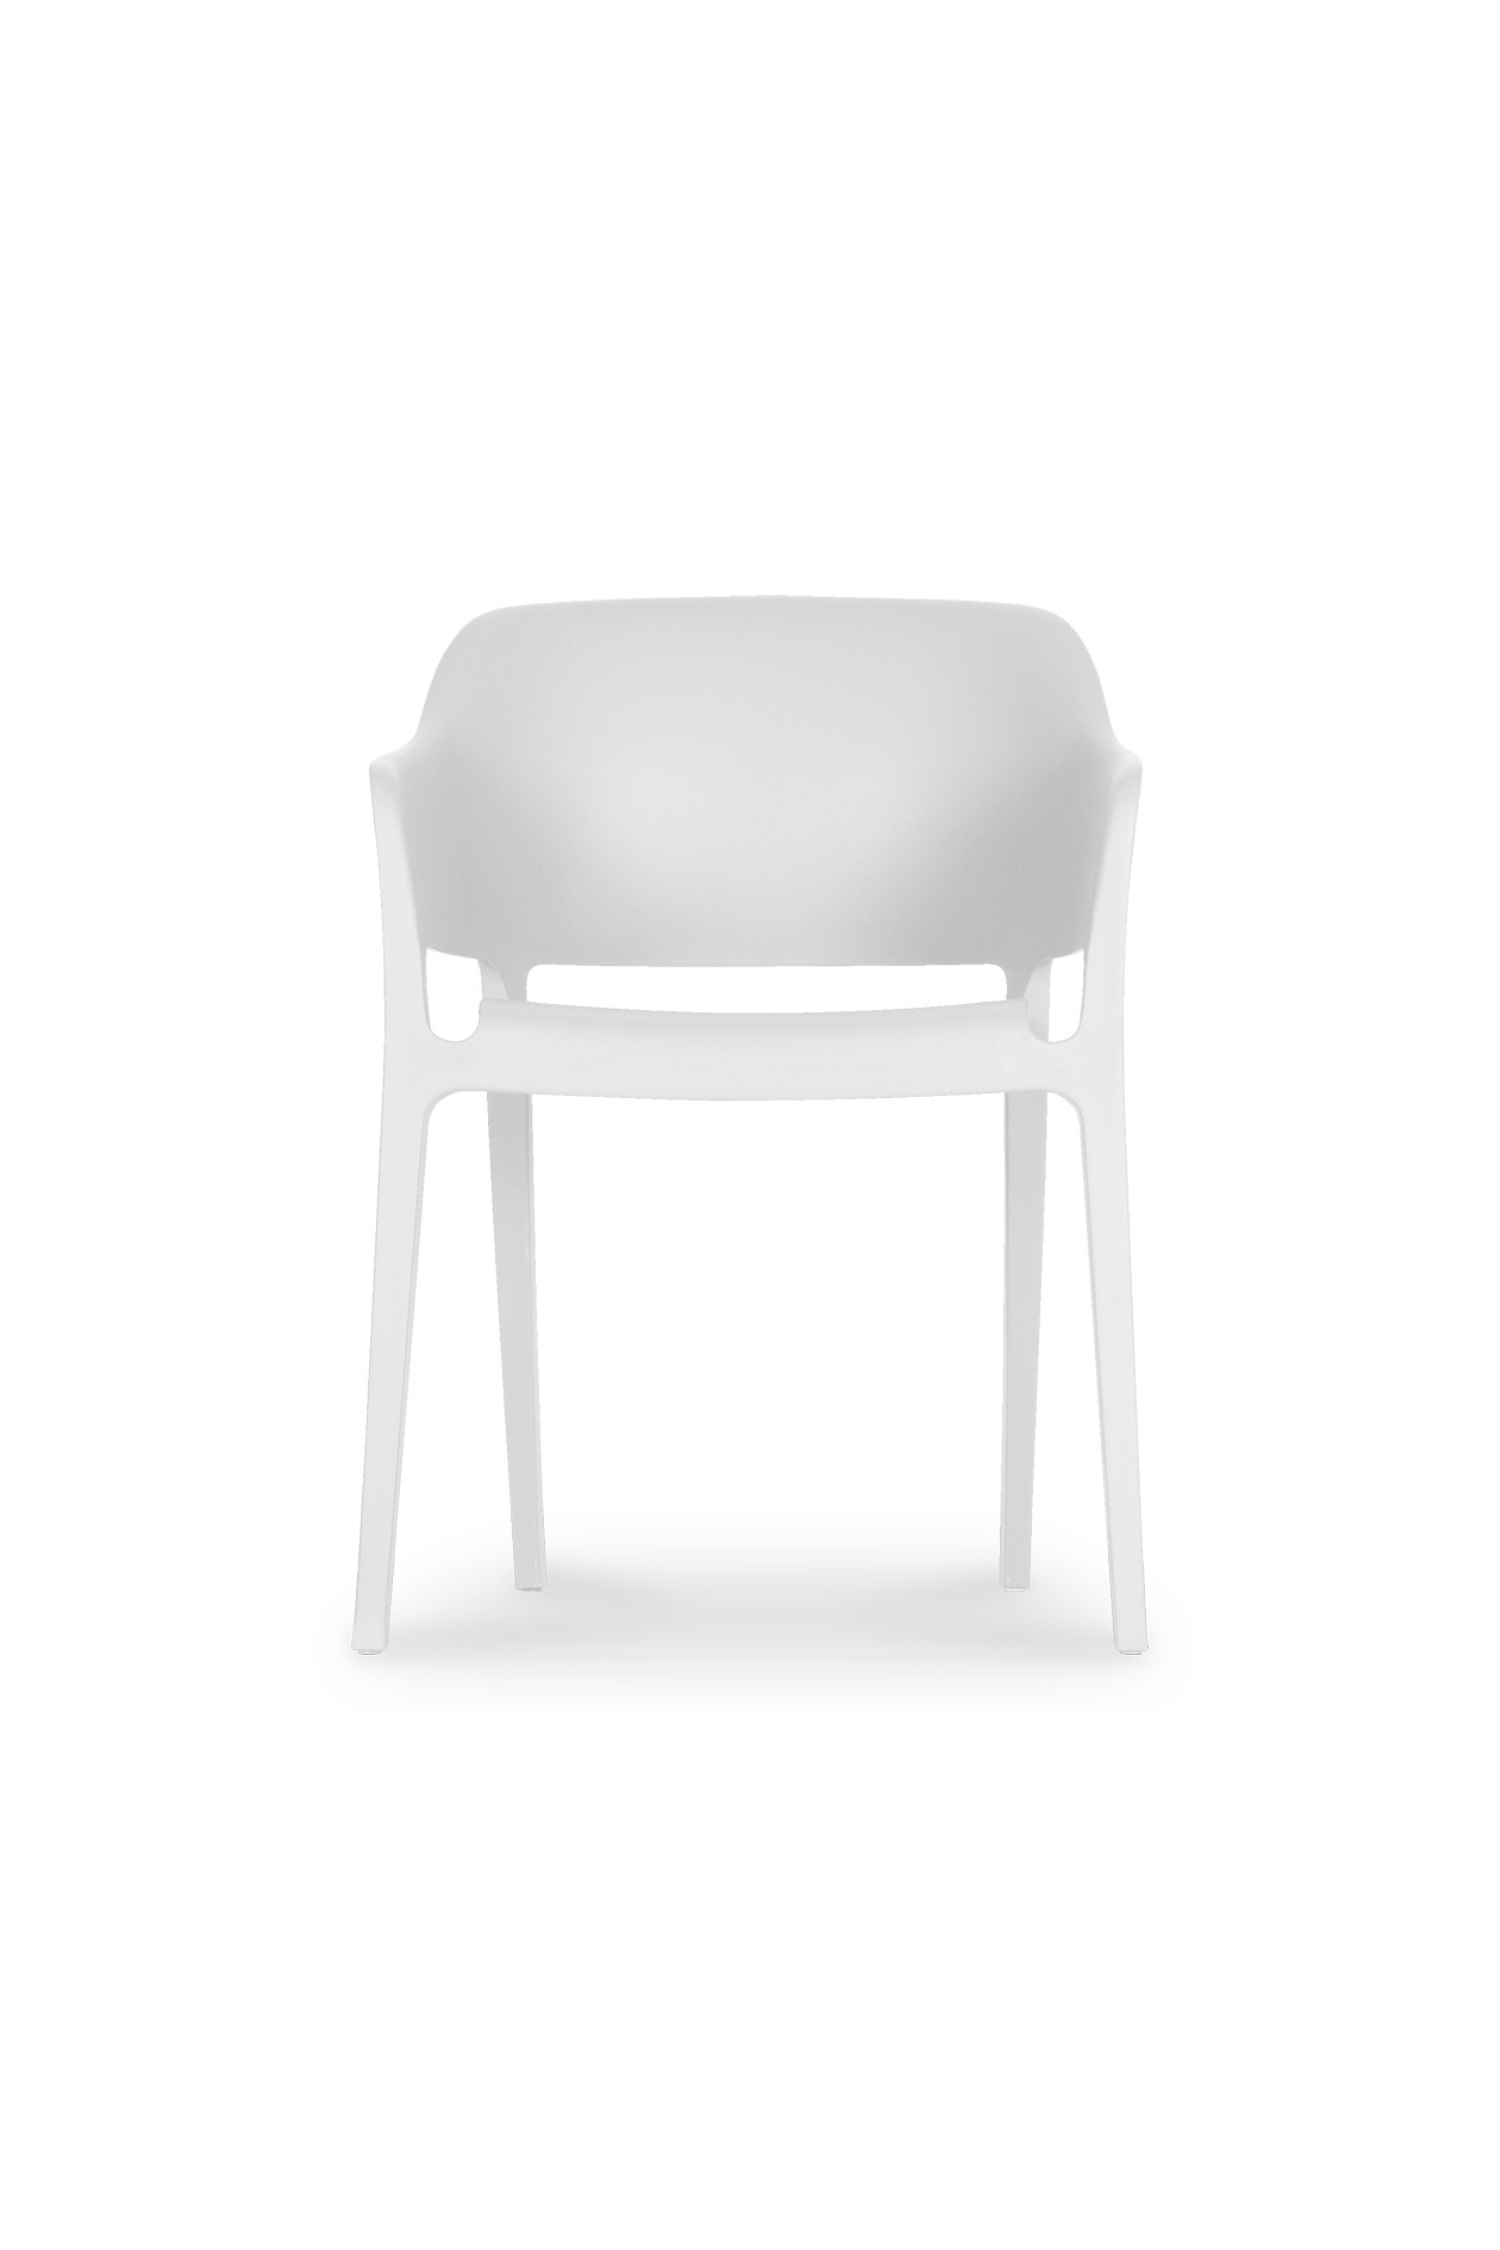 Farrah Outdoor Dining Chair - Set of 2